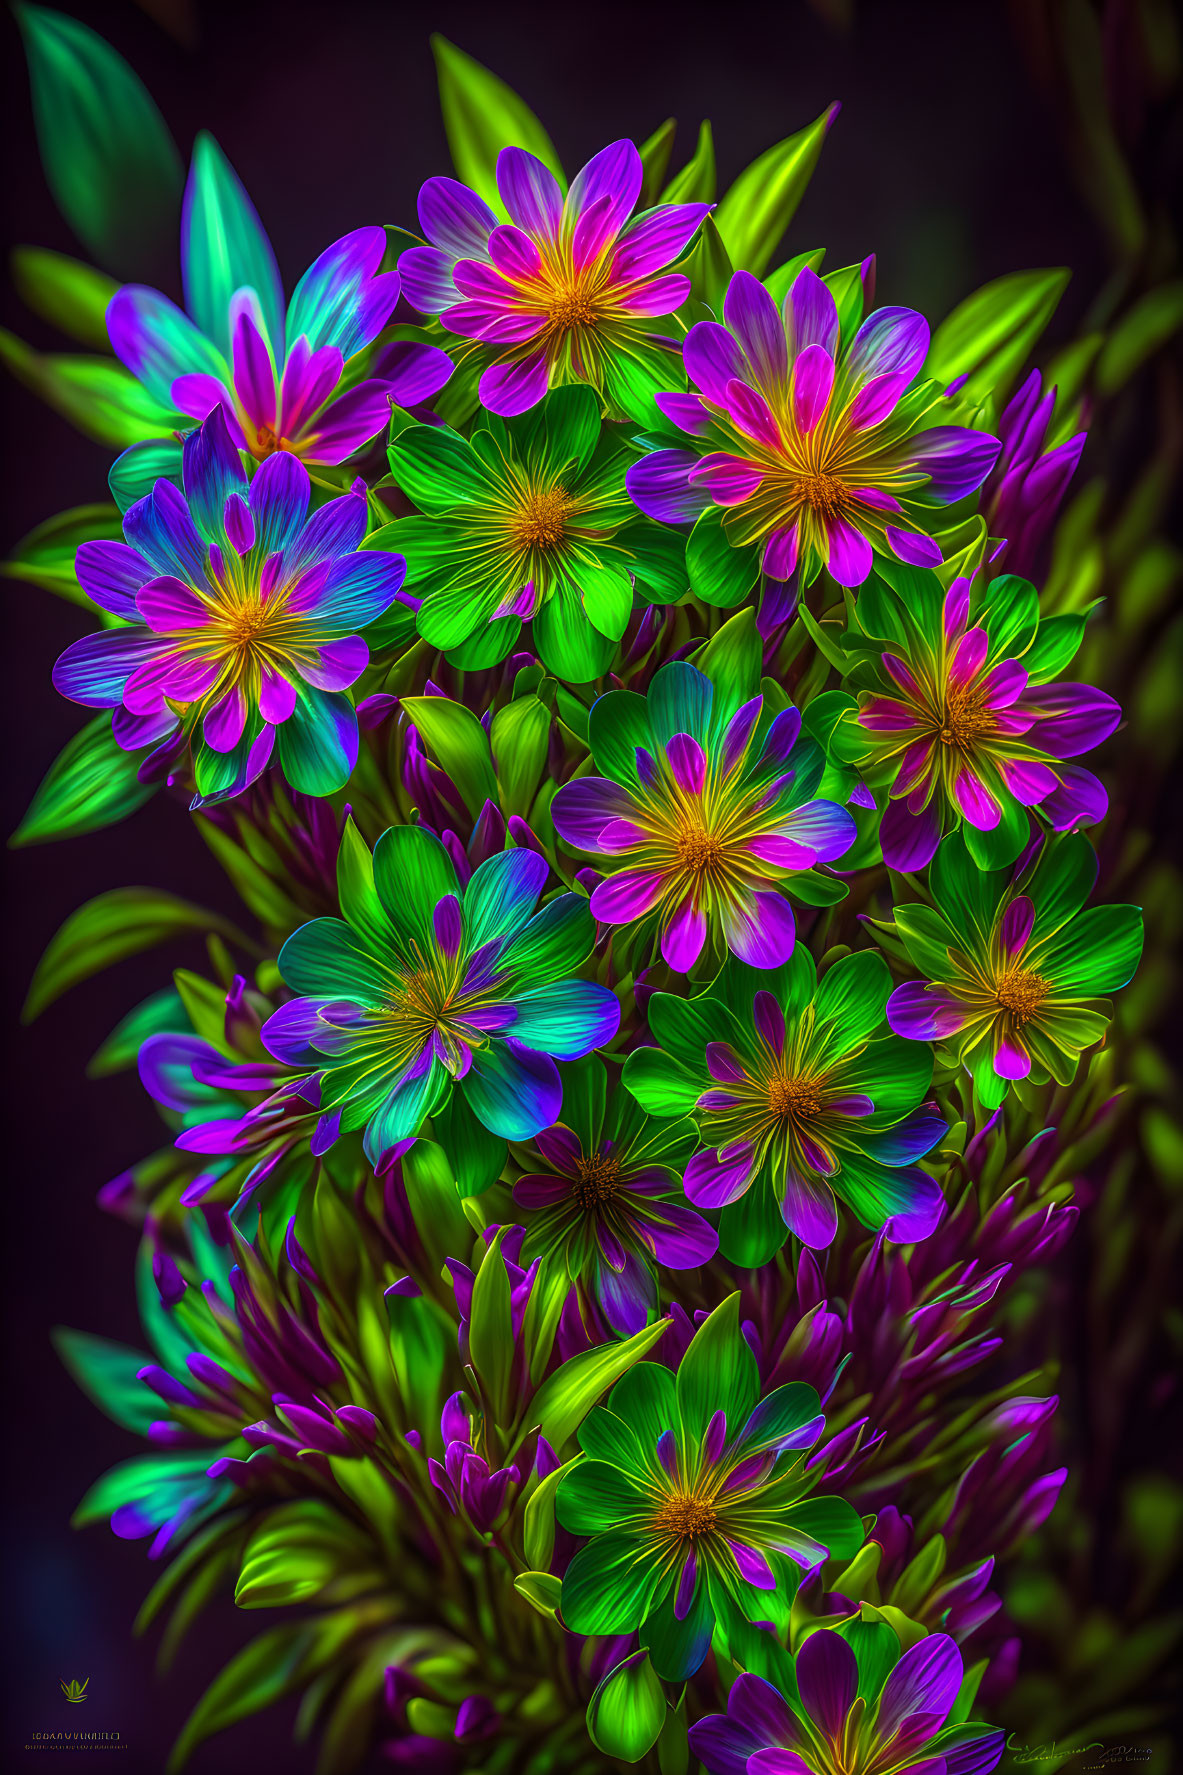 Unique Flowers, Otherworldly 